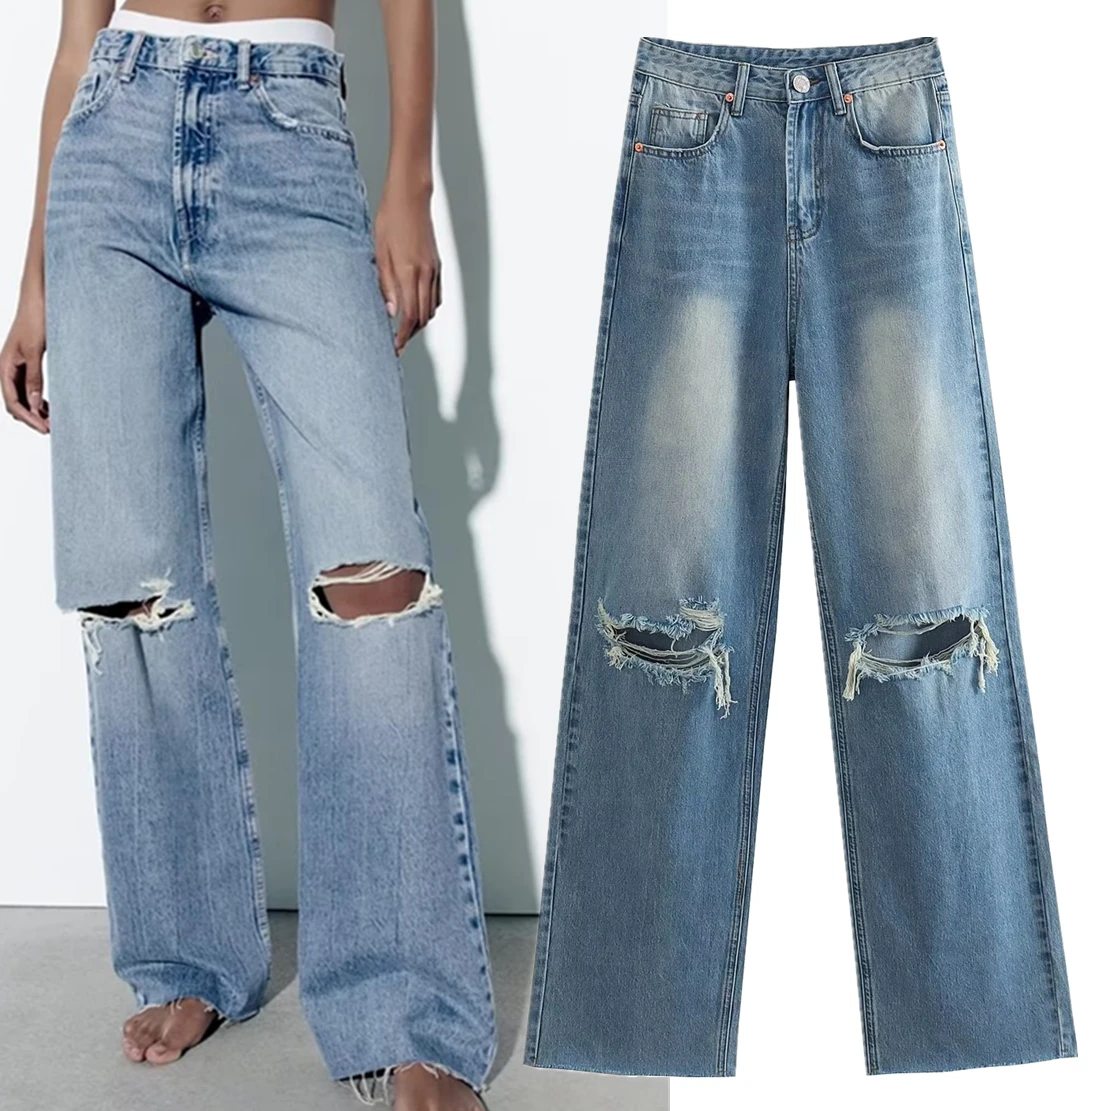 

Elmsk American Vintage Boyfriend Ripped Jeans Girls Fashion Ladies High Street Loose Mom Jeans Harem Denim Pants Women